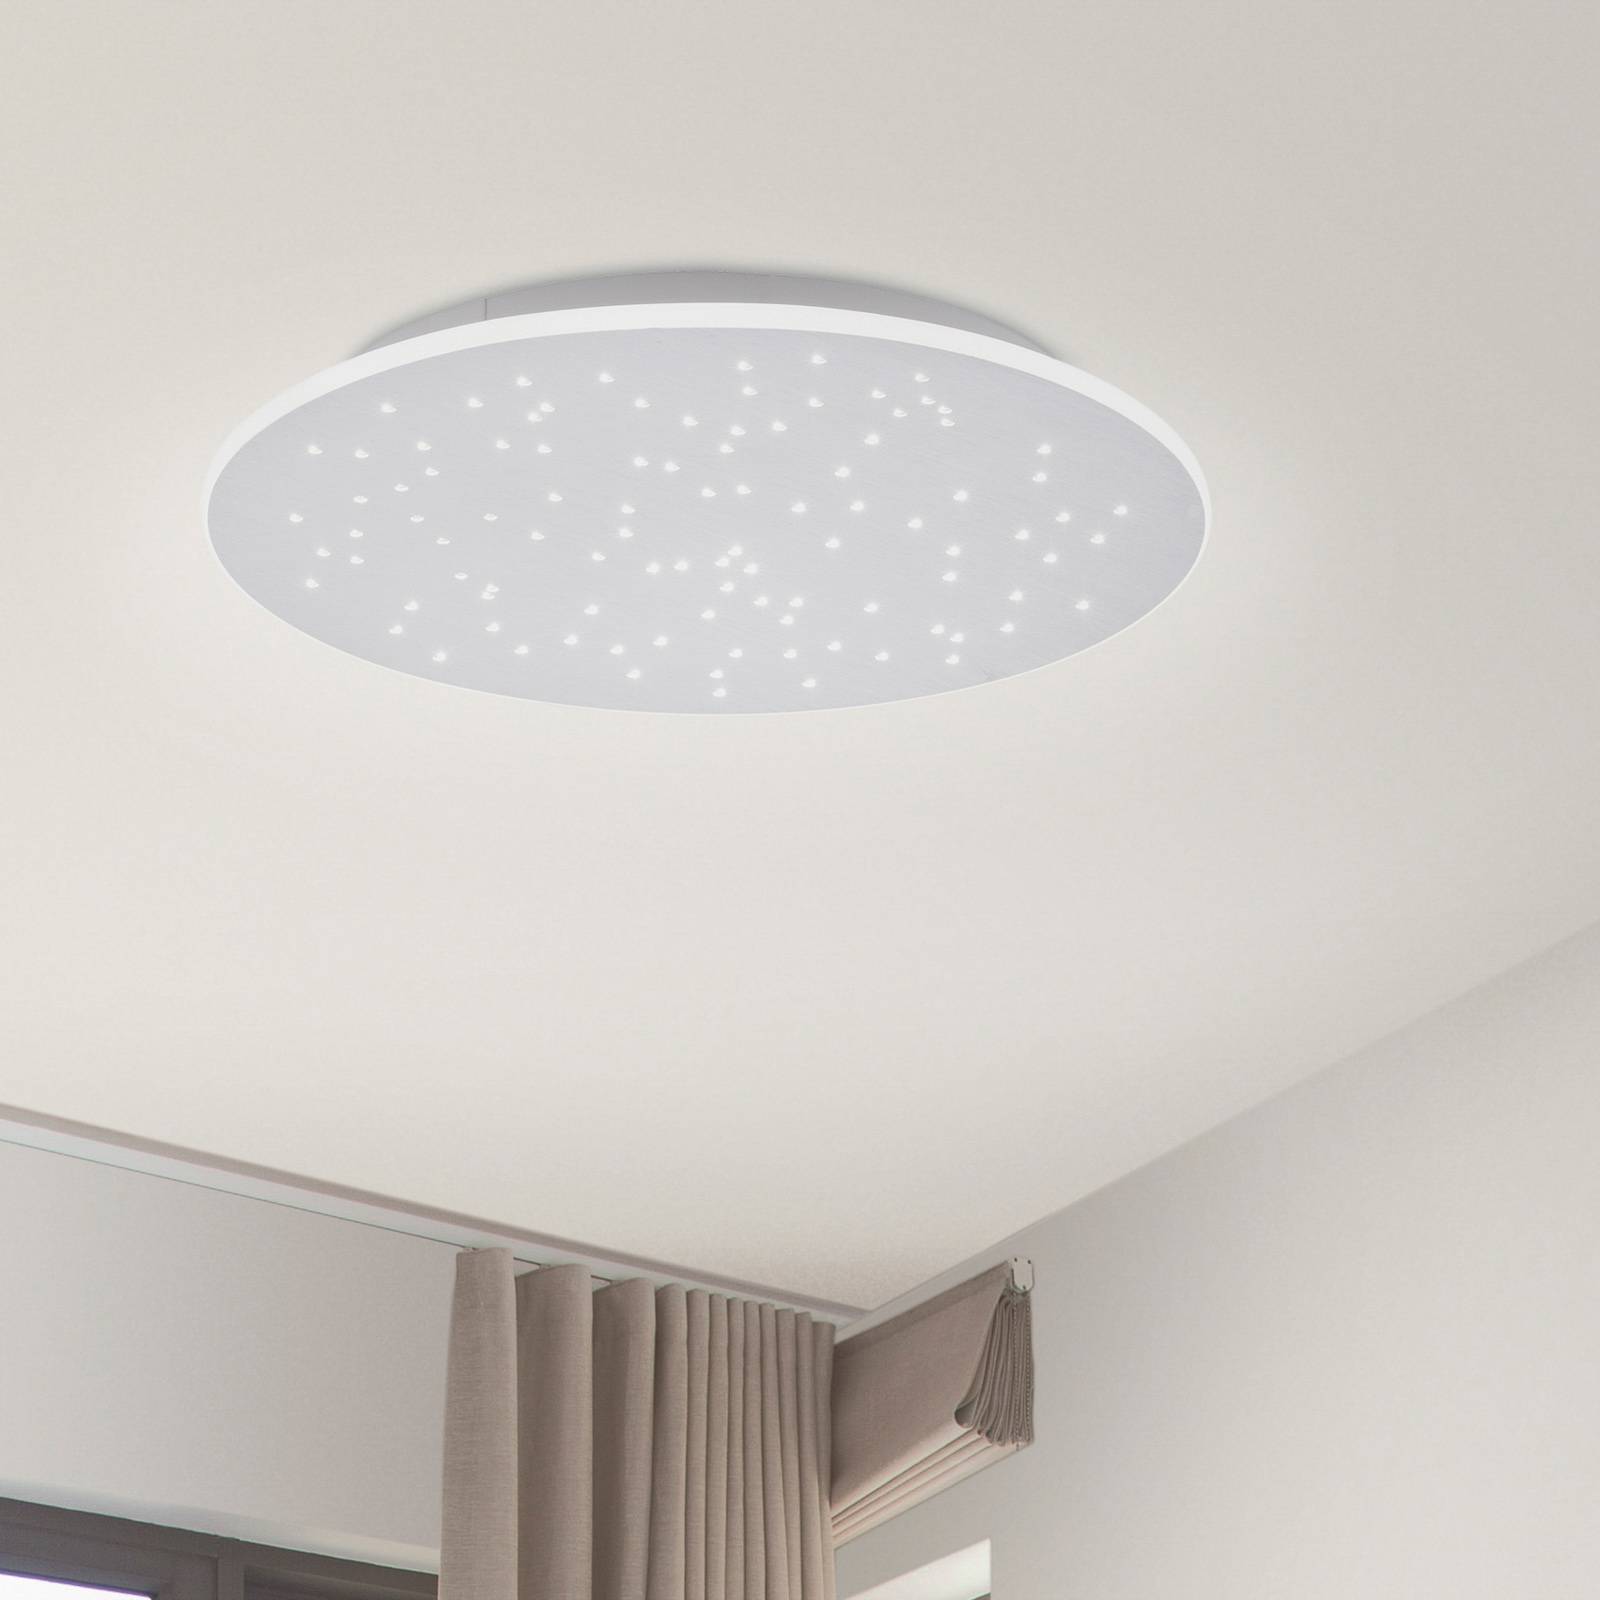 Image of Q-Smart-Home Paul Neuhaus Q-NIGHTSKY plafonnier LED, rond 4012248331286